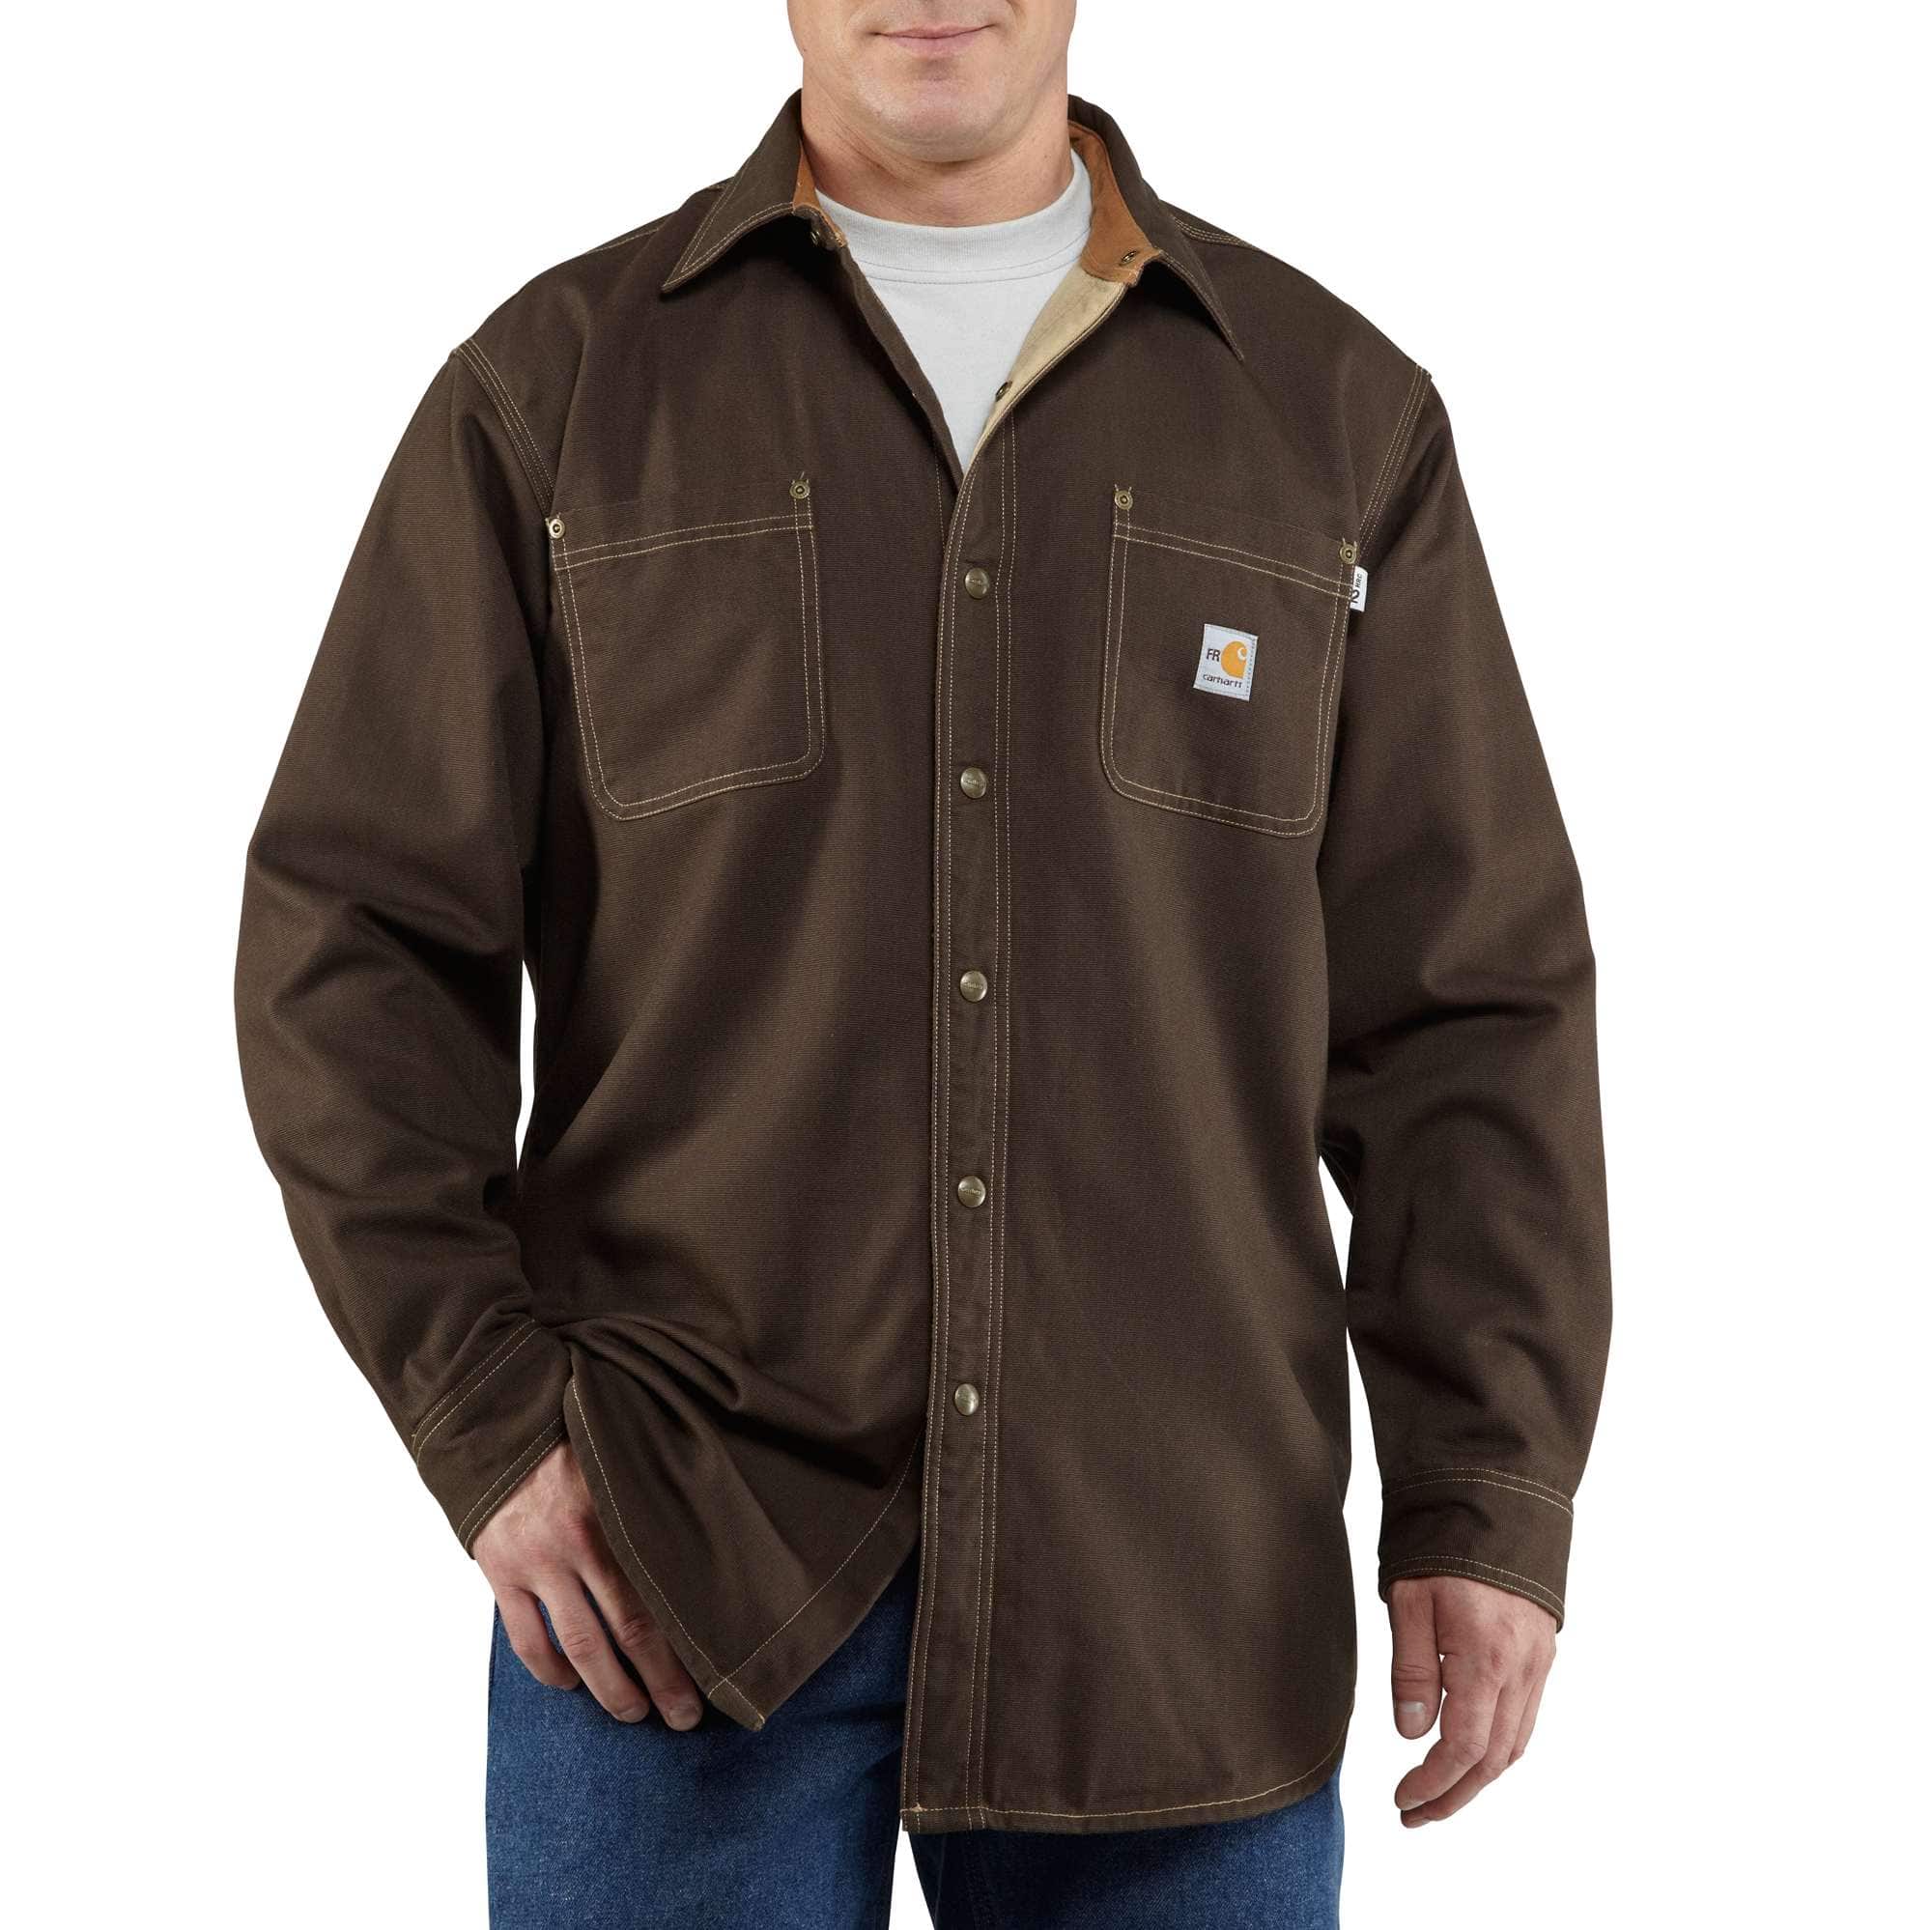 Electrician & Utility Worker Uniforms for Work | Carhartt Company Gear